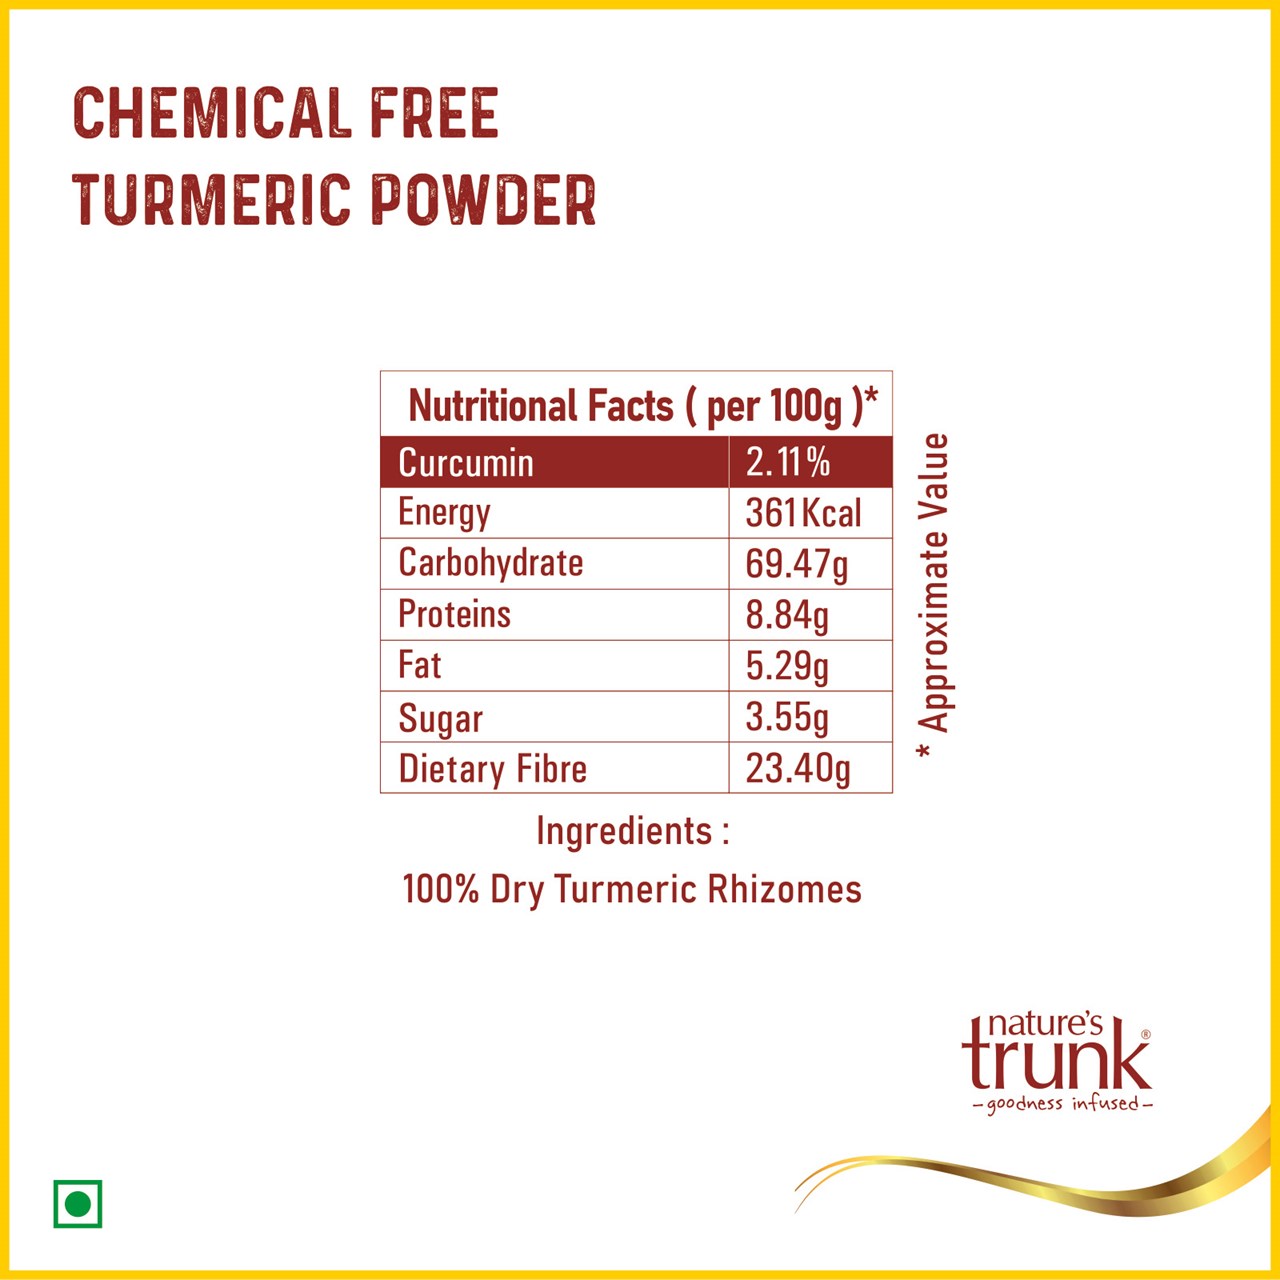 Picture of Turmeric Powder - Haldi ( Pesticide Free ) 300 Grams